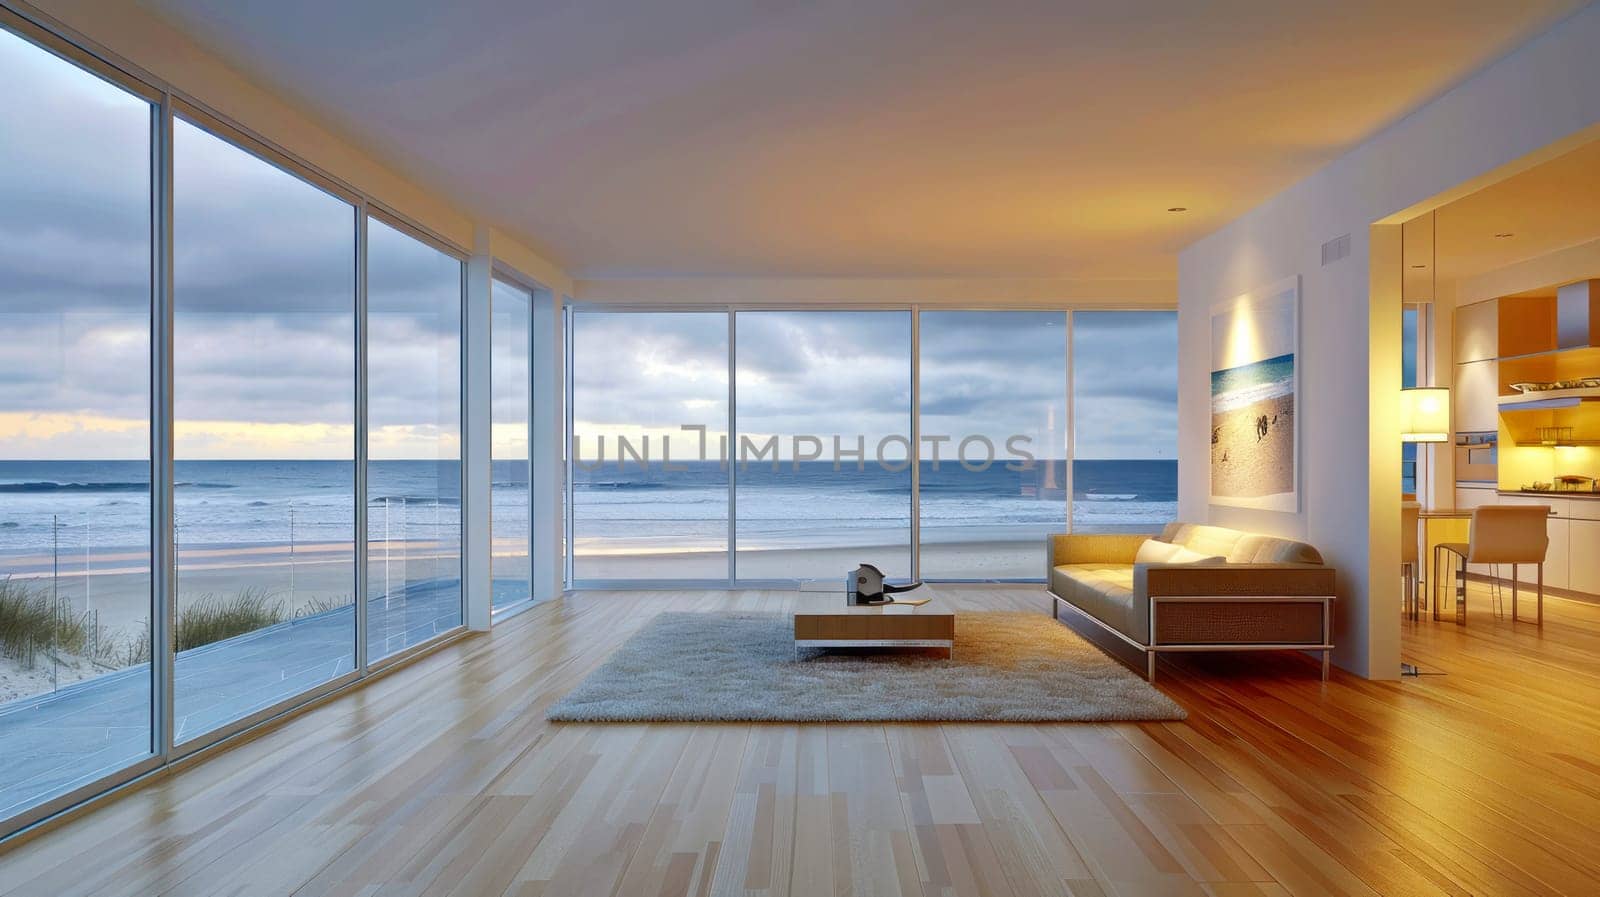 Minimalist bedroom interior with ocean sea view. Modern coastal interior. Summer, travel, vacation, dreams holiday, resort.